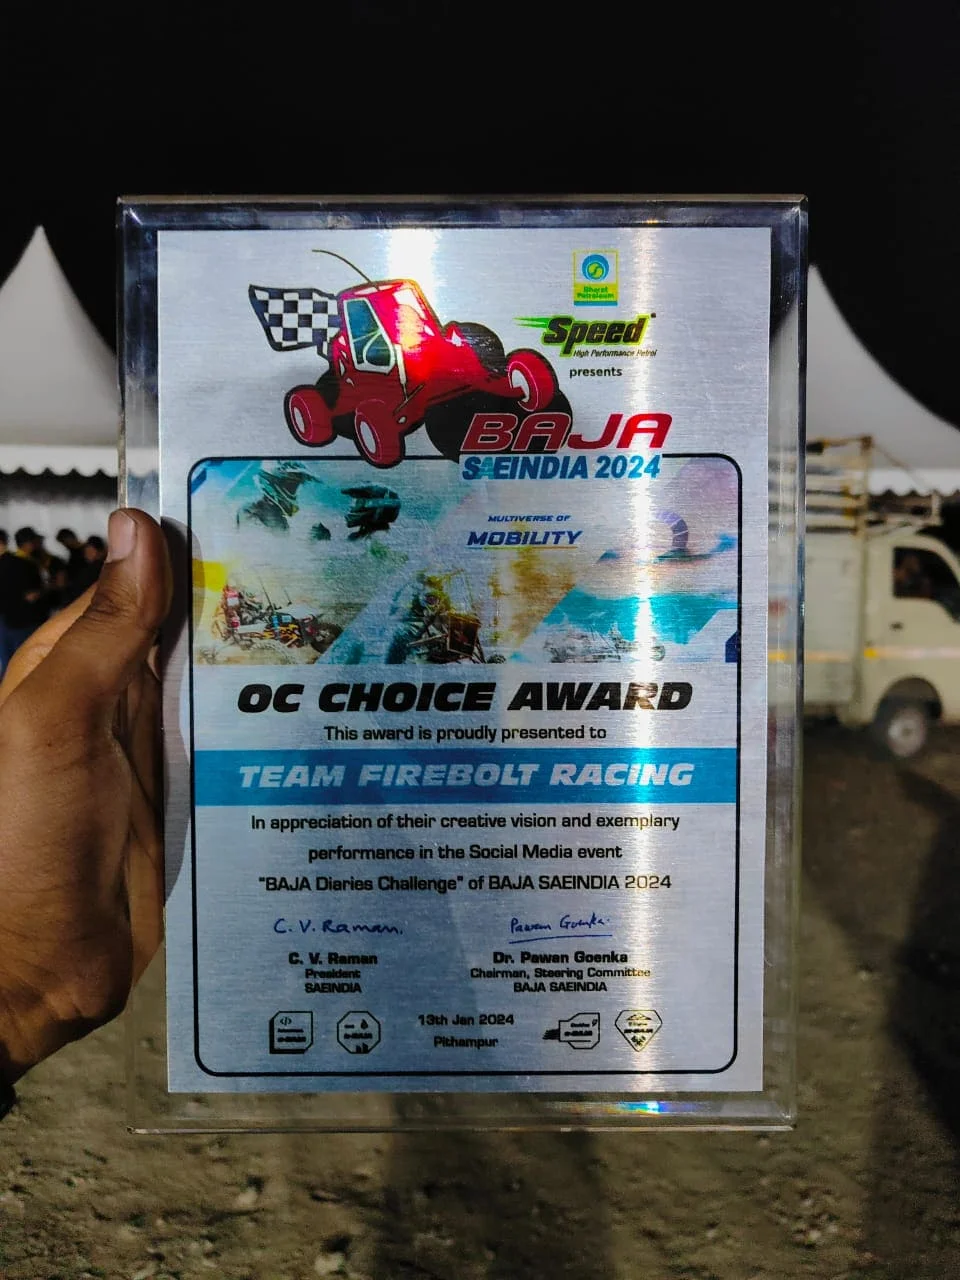 OC Choice Award to Team Firebolt Racing